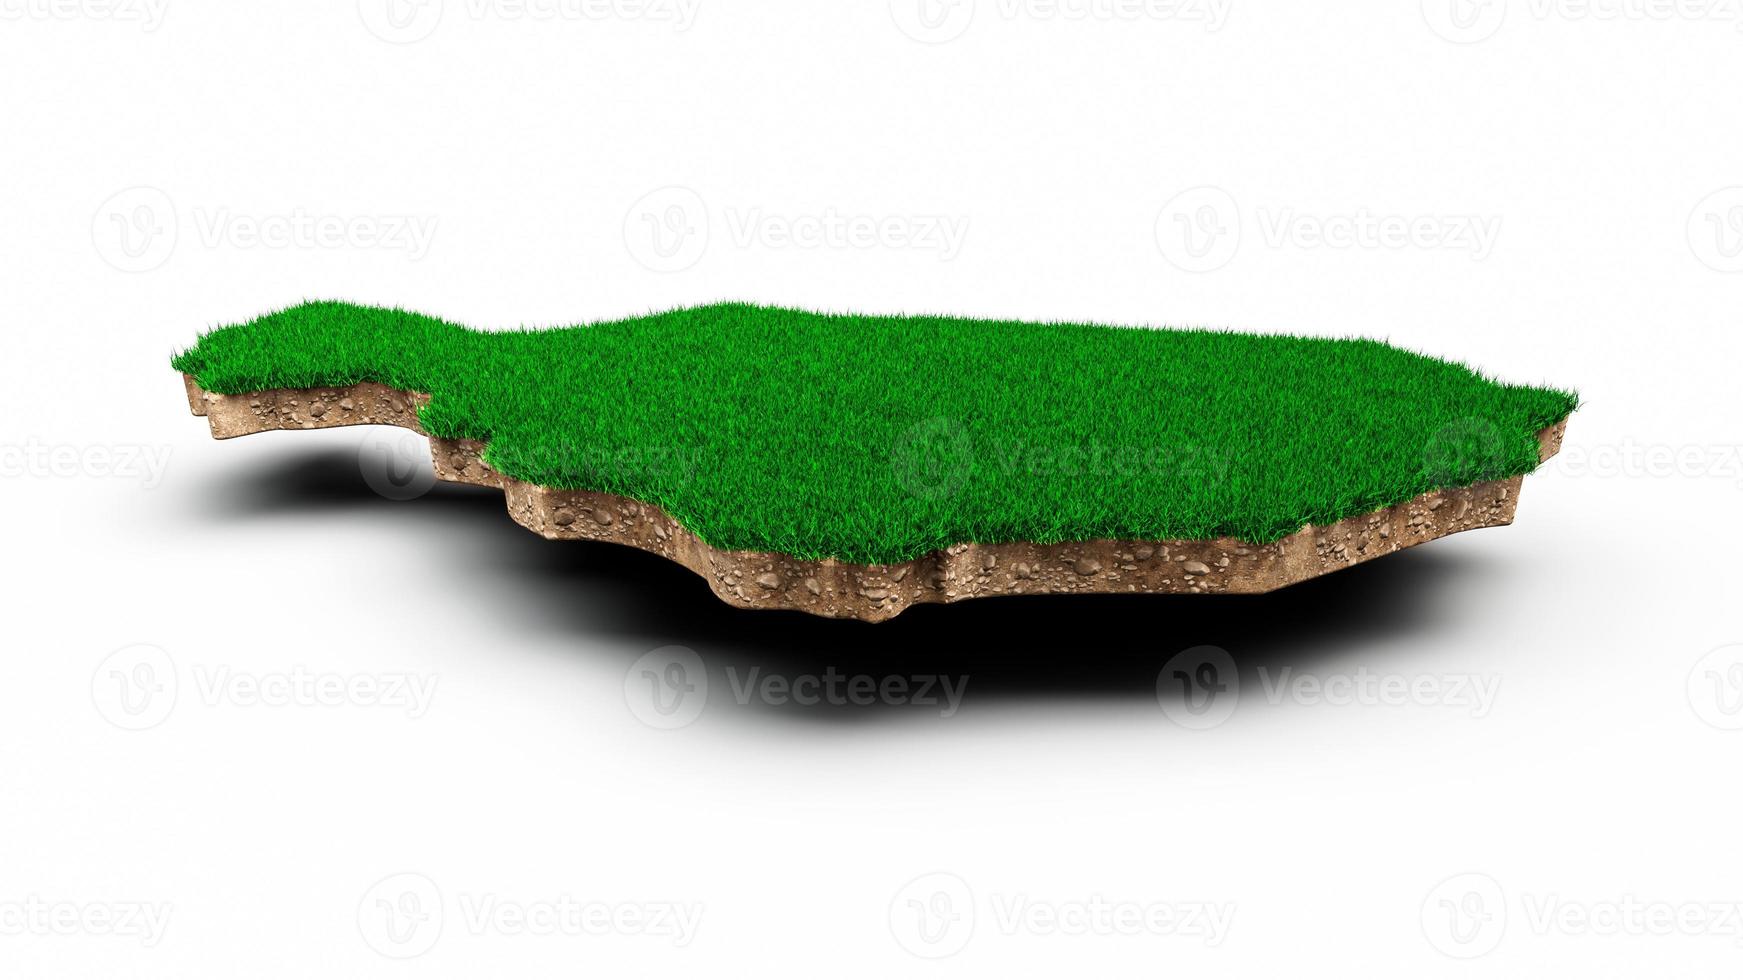 niger karte boden land geologie querschnitt mit grünem gras und felsen bodentextur 3d illustration foto